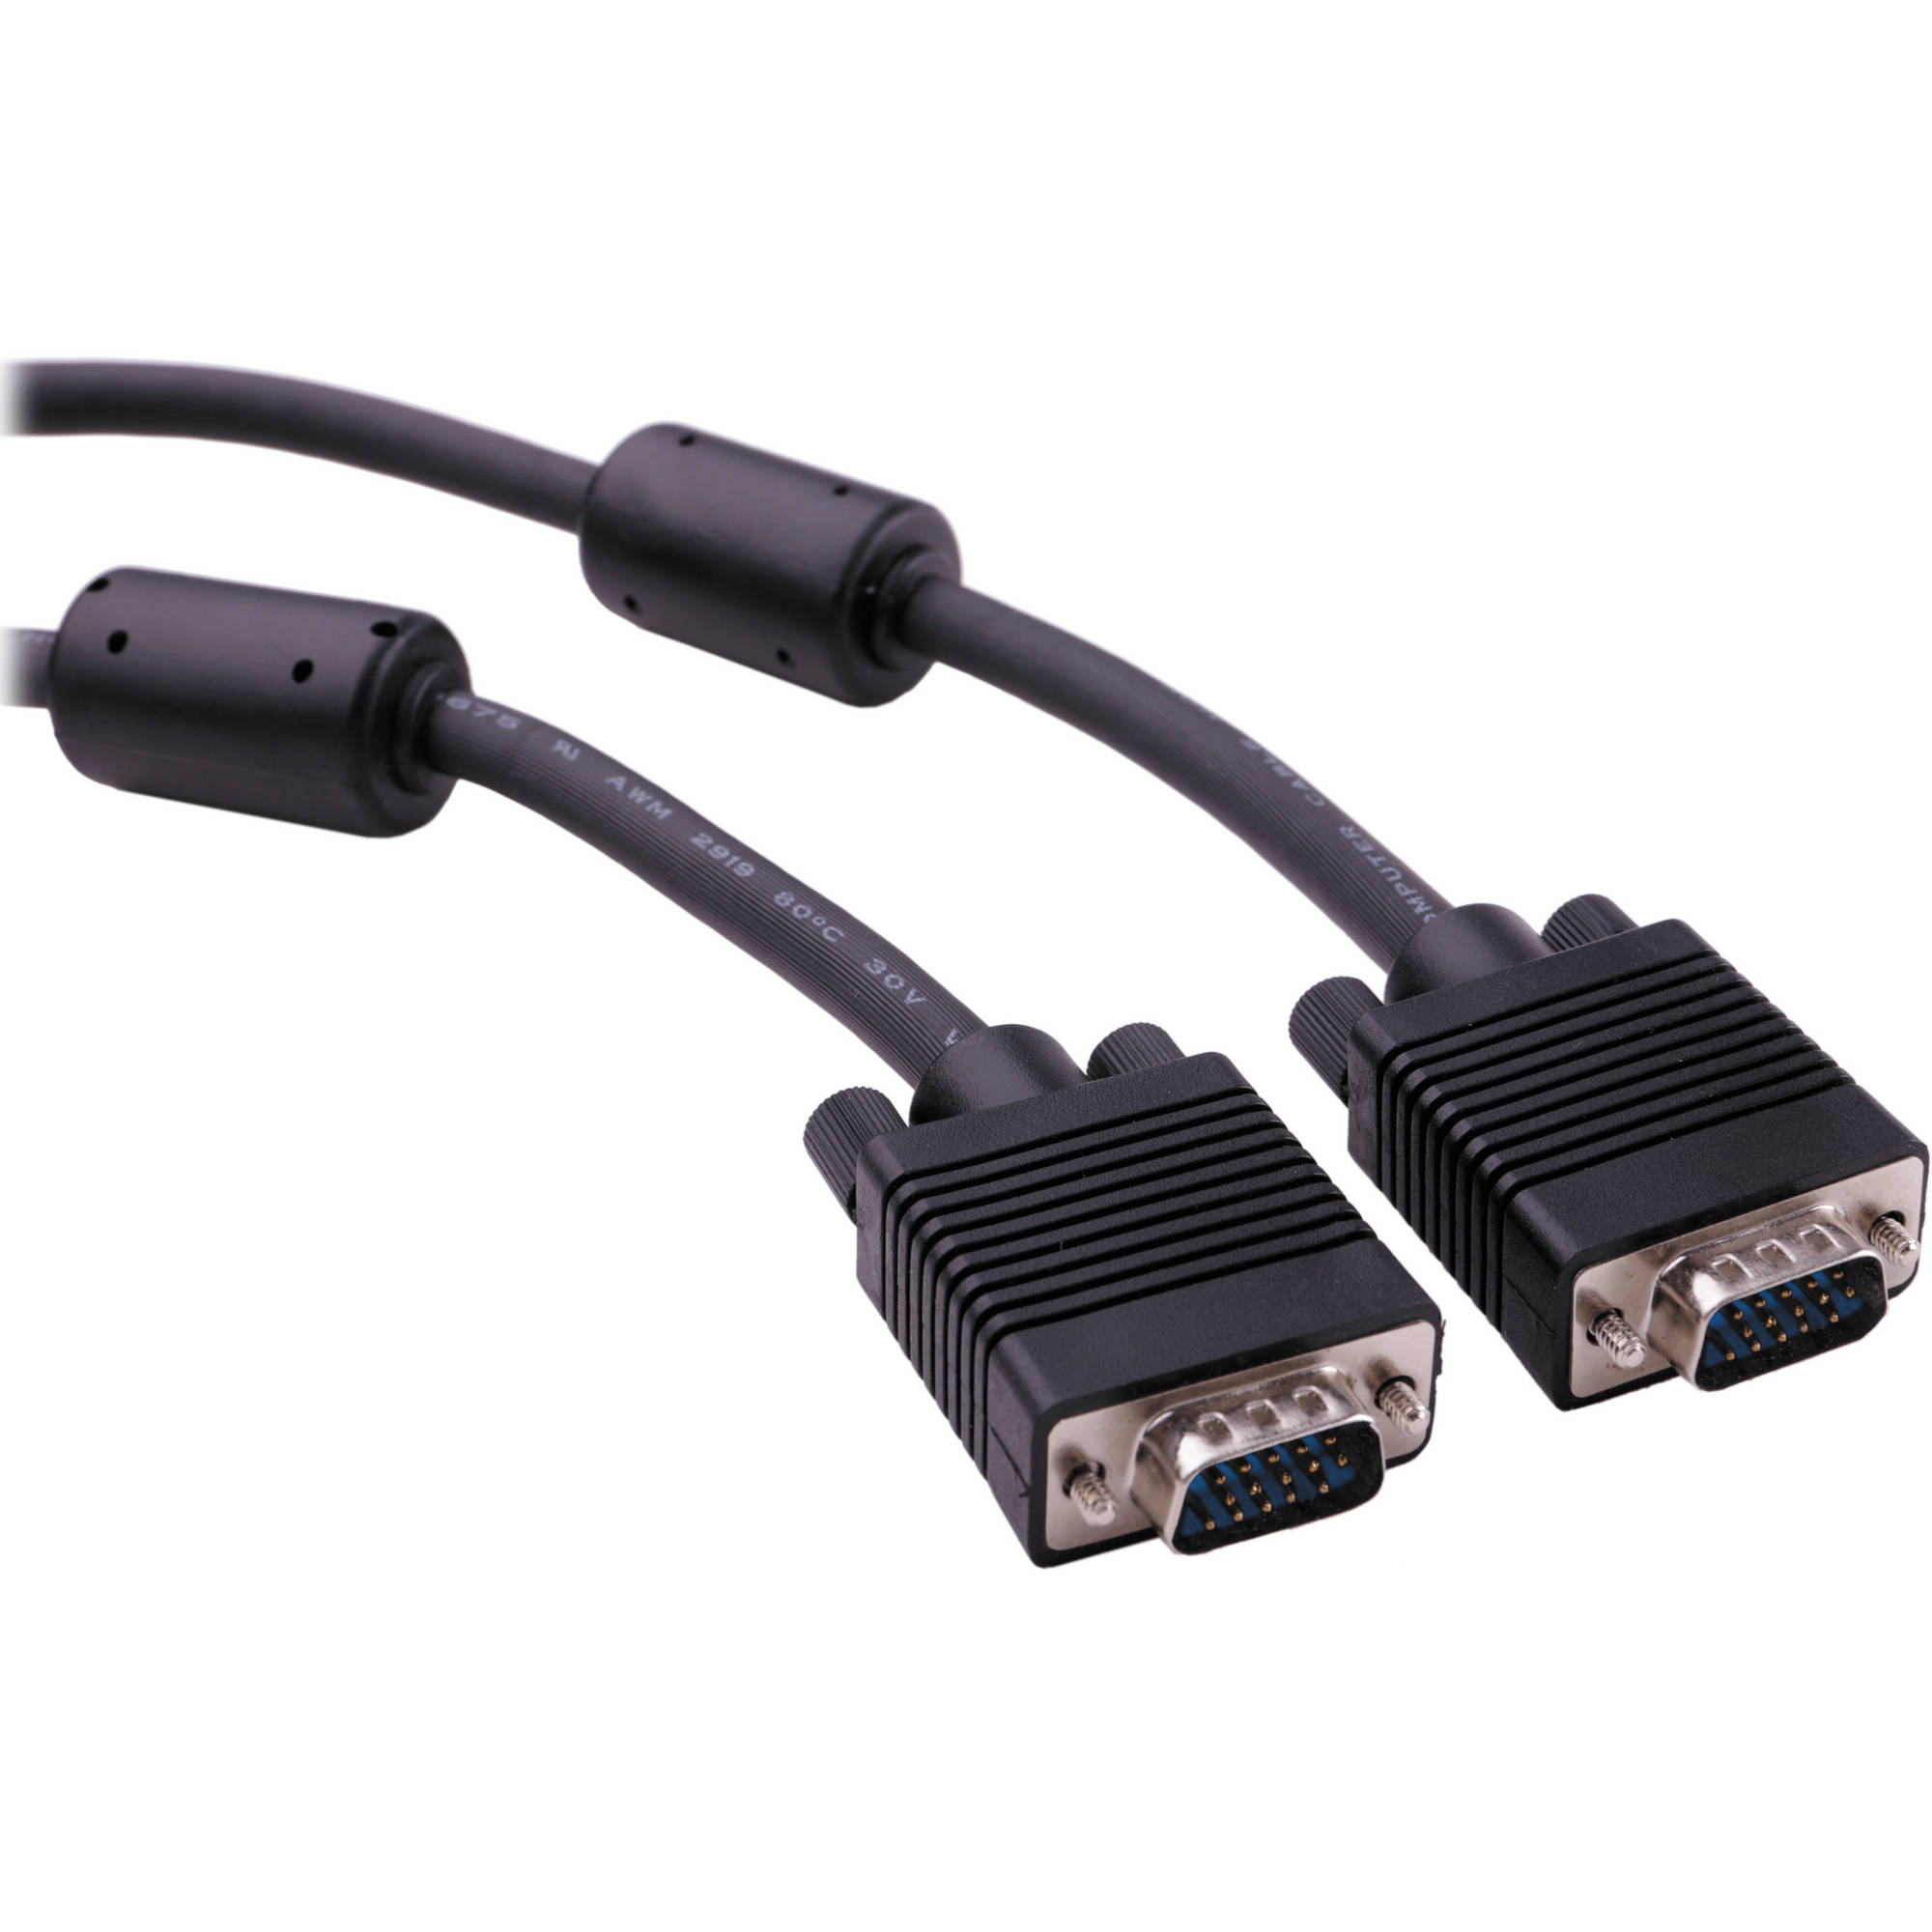 10m, black VGA male to VGA male cable for TV computer monitor 